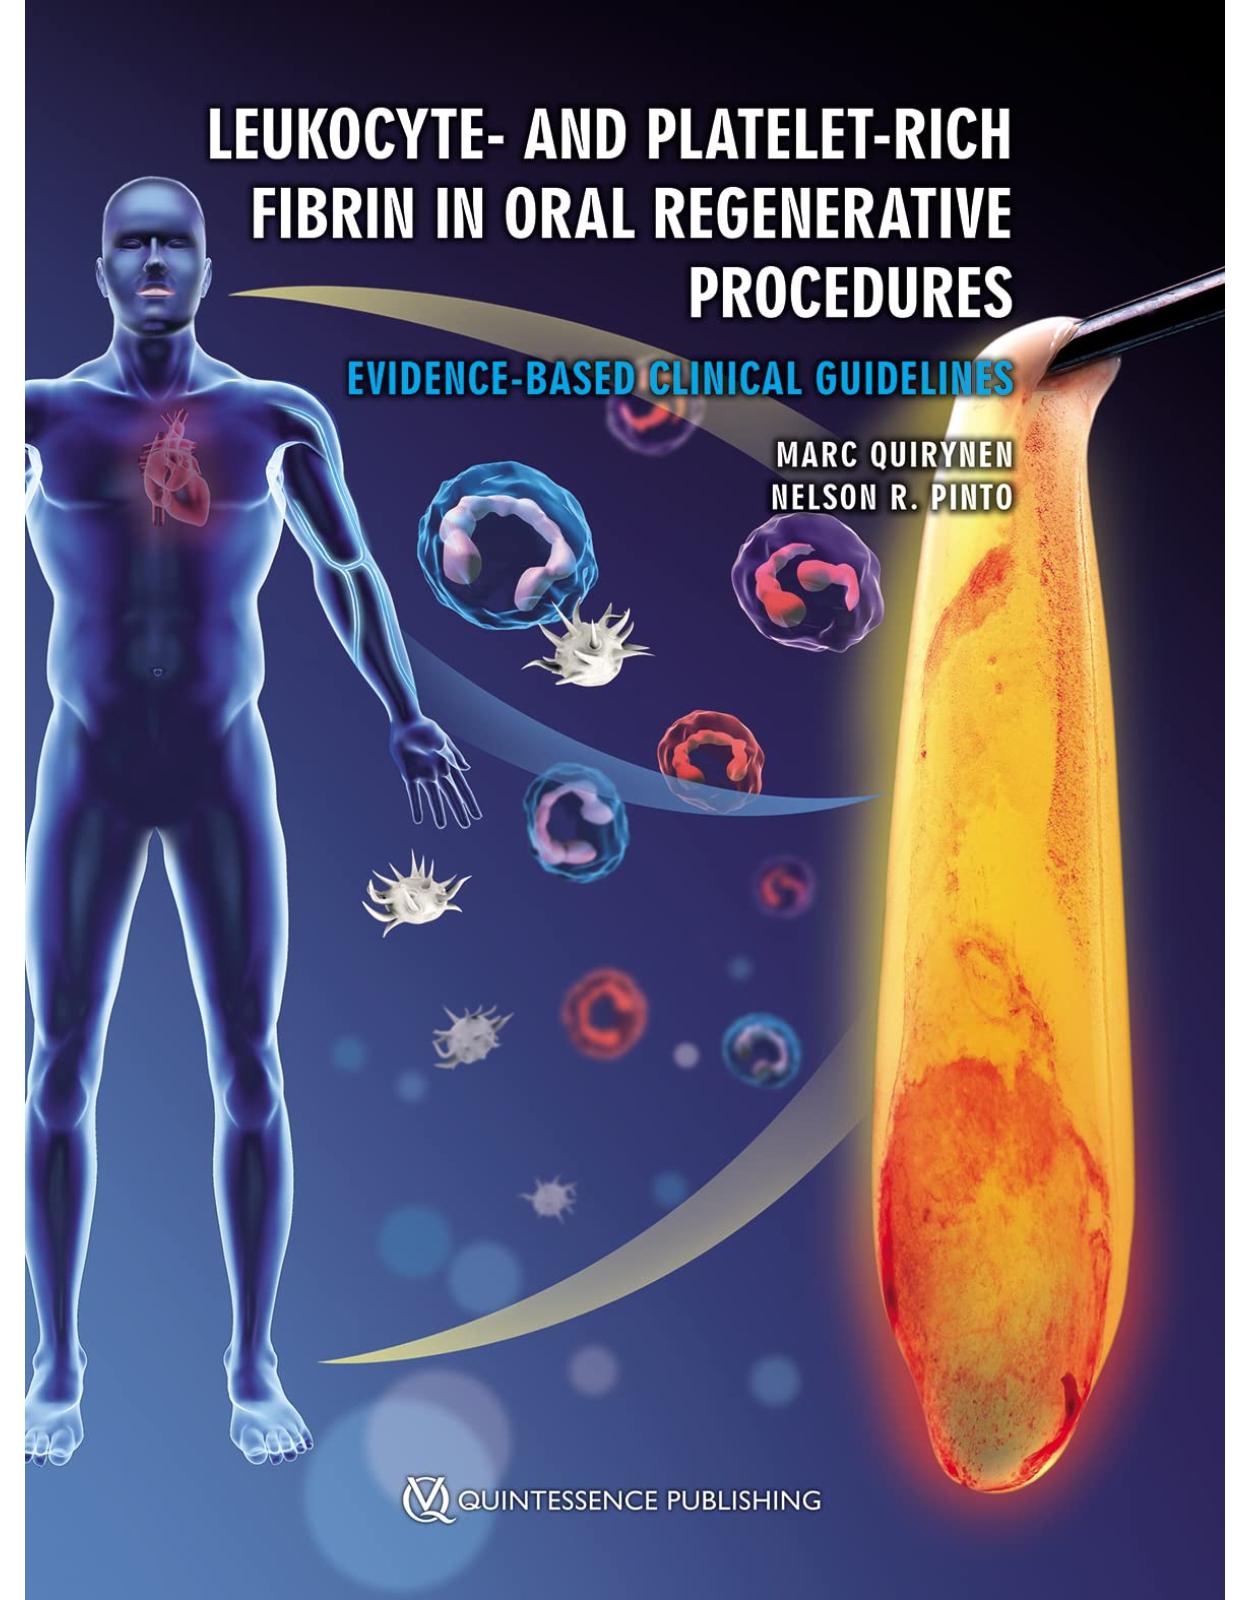 Leukocyte- and Platelet-Rich Fibrin in Oral Regenerative Procedures